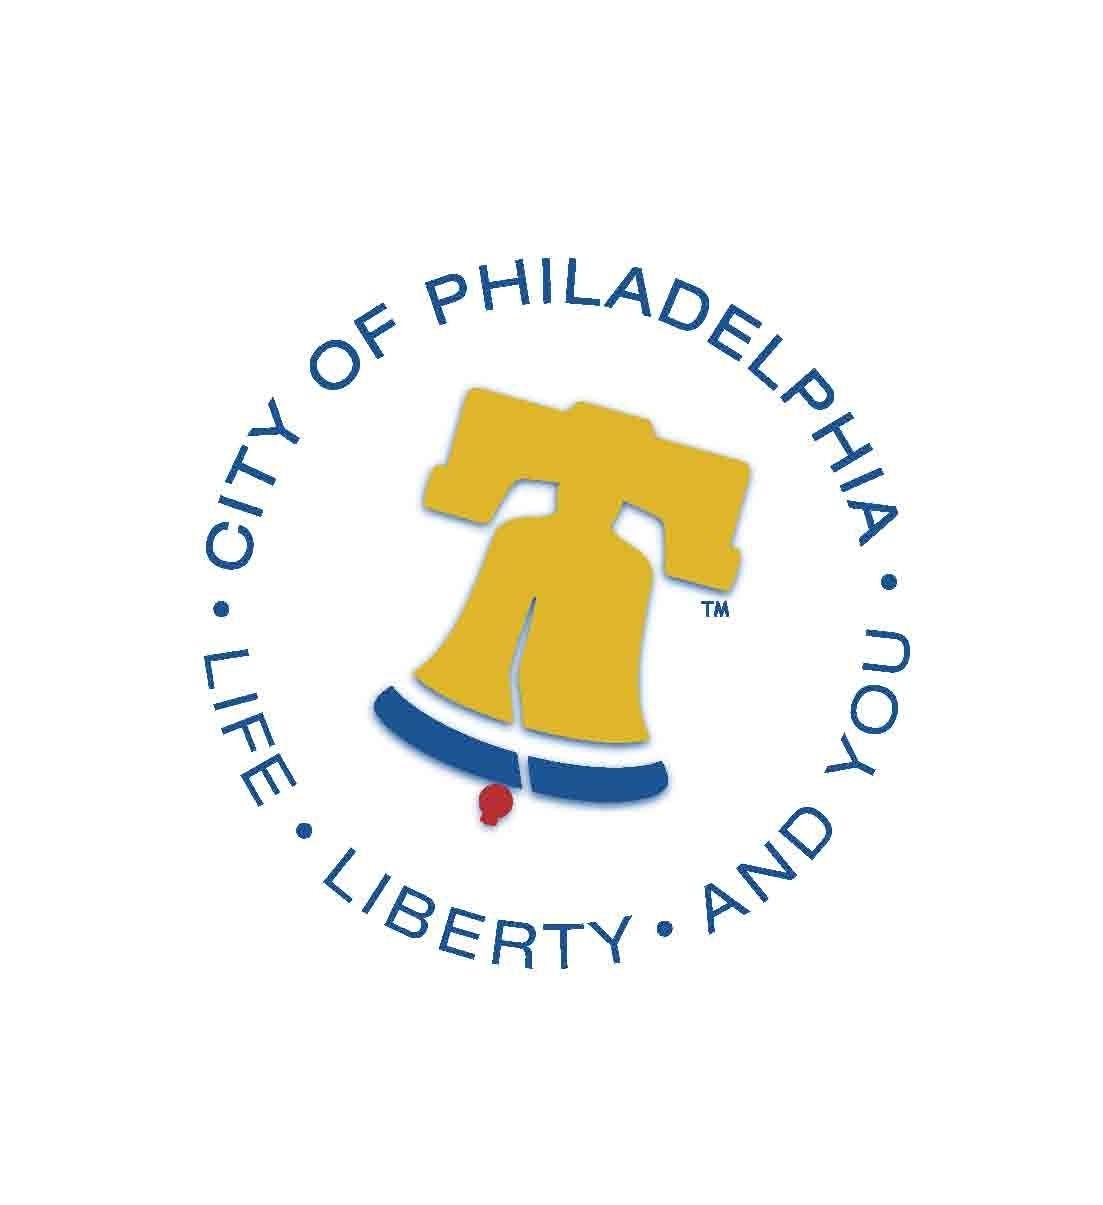 Philadelphia Logo - Philadelphia city logo (1). Philadelphia Energy Authority